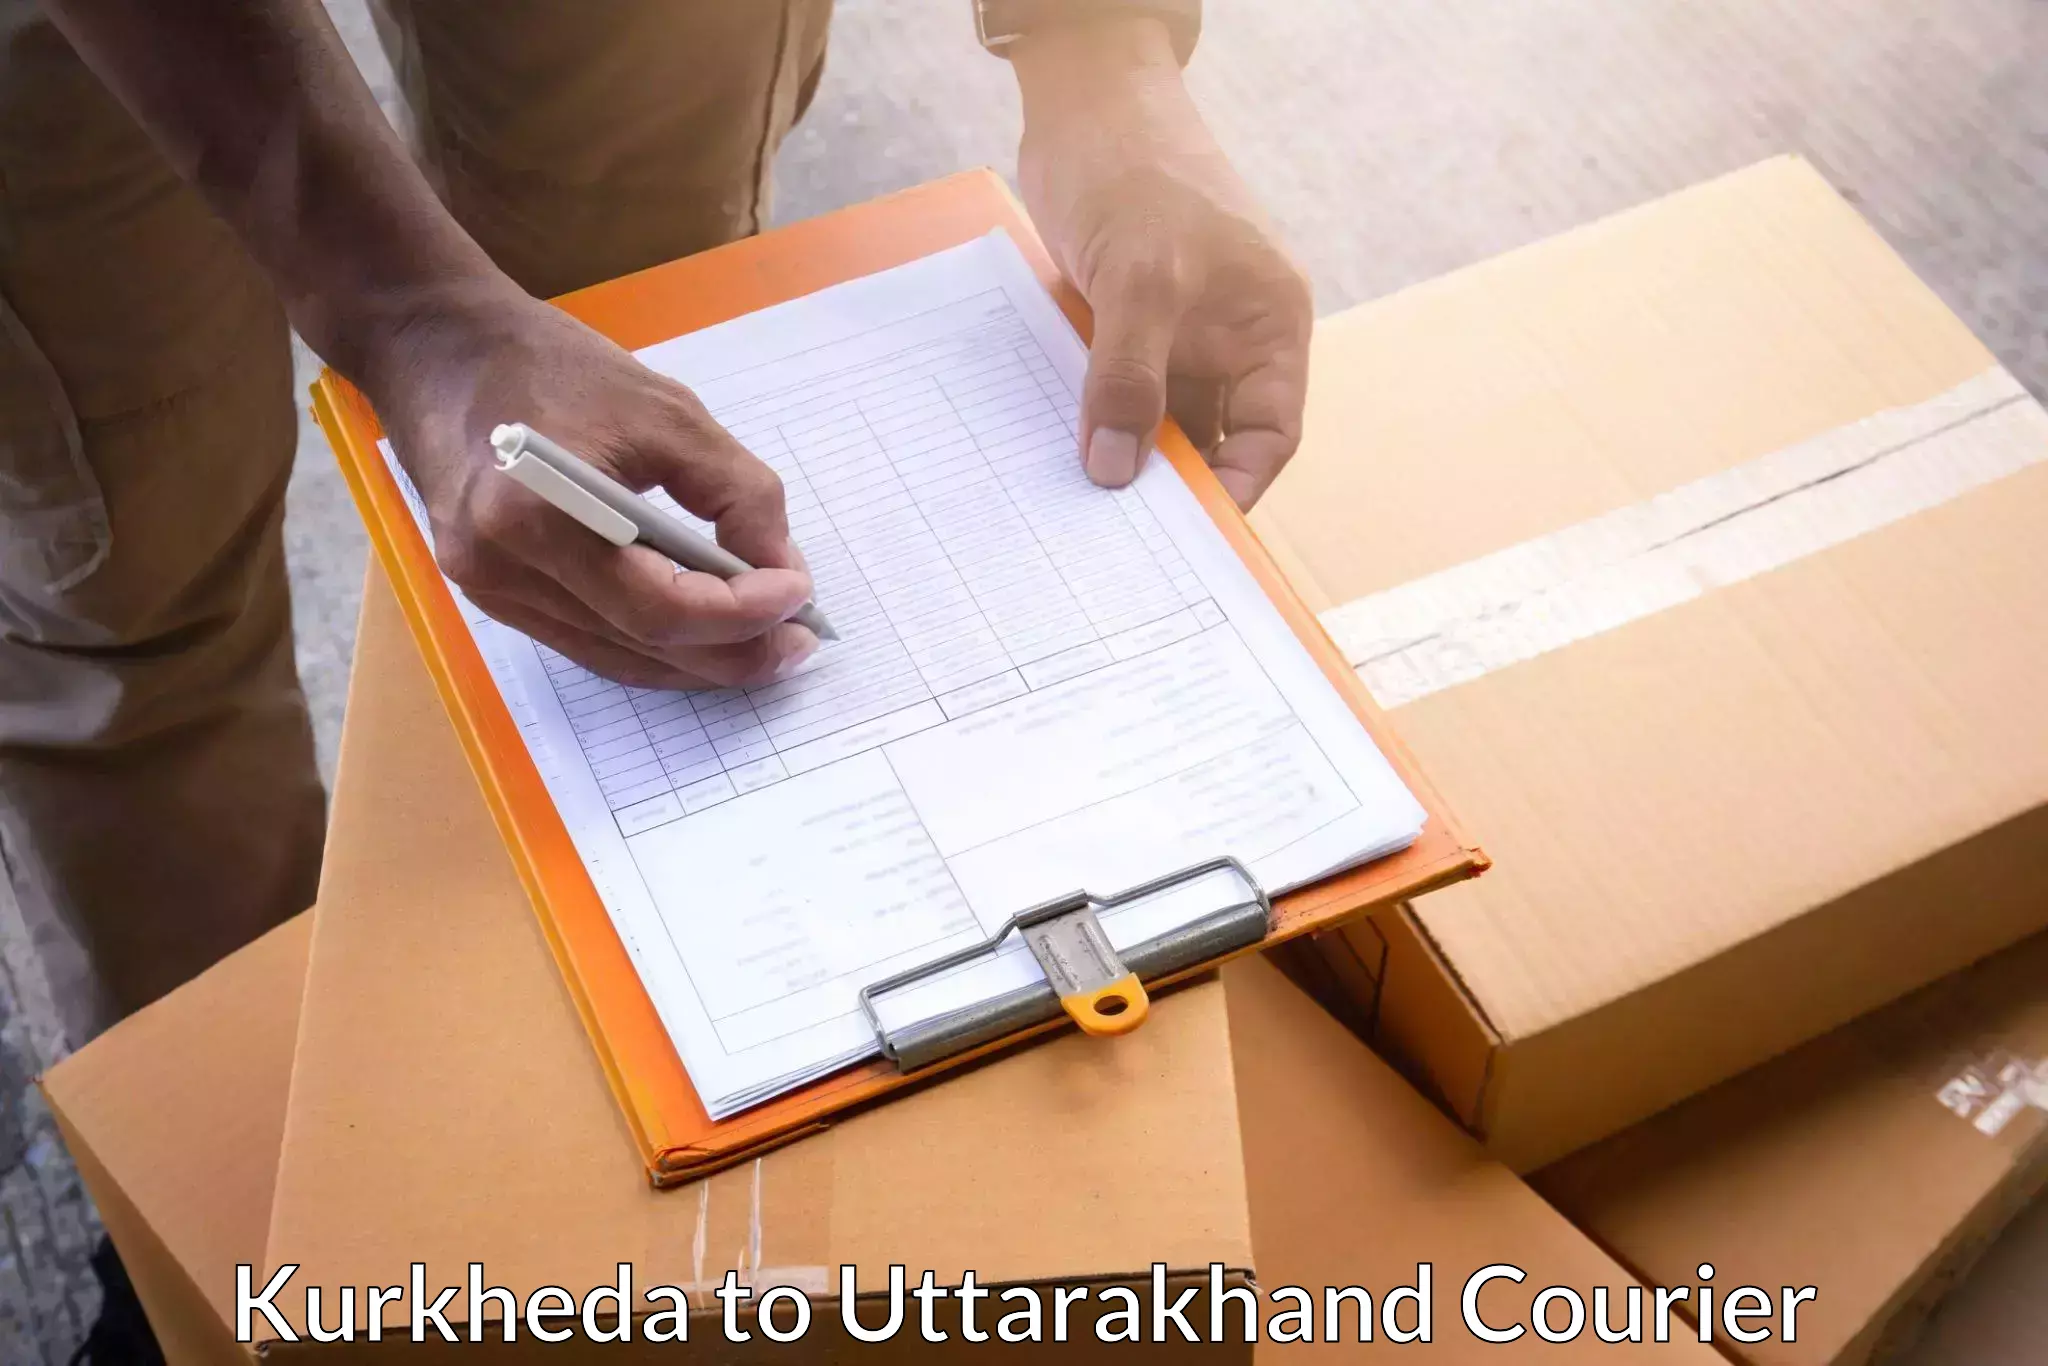 Package delivery network Kurkheda to Bhimtal